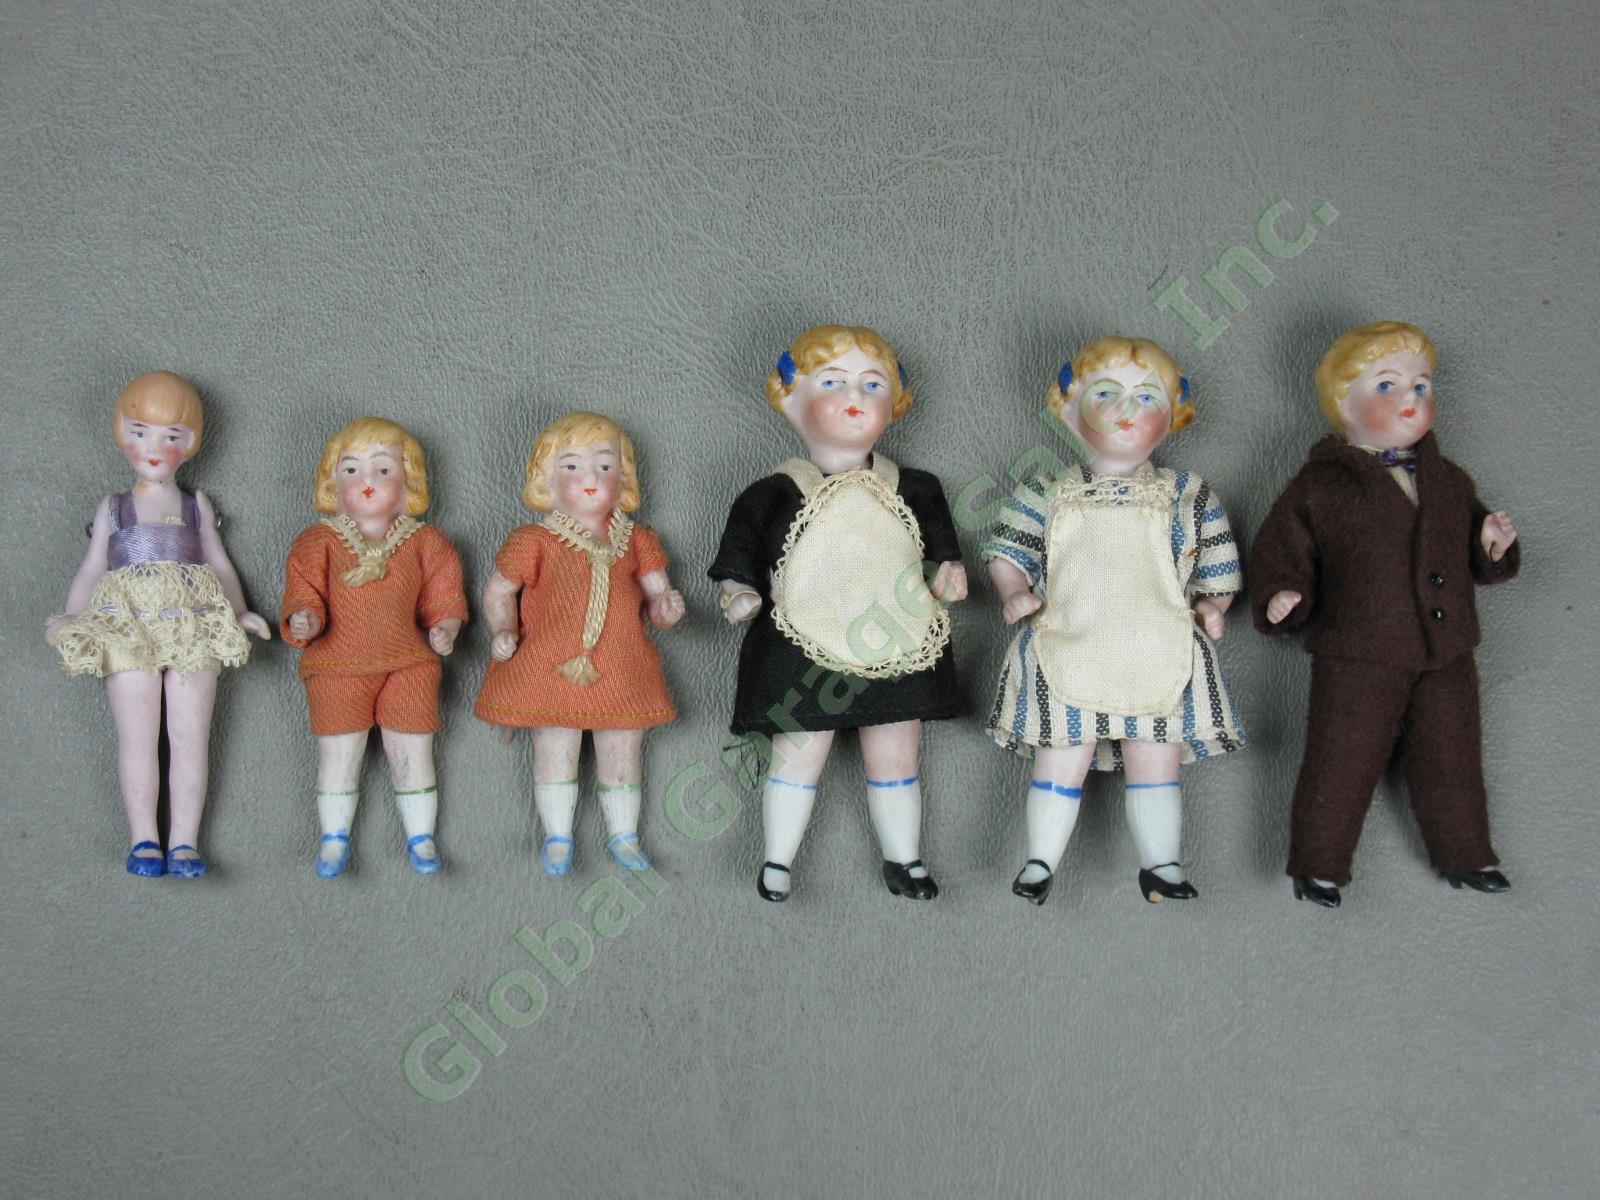 6 Vtg Antique 1920s 1930s Porcelain Bisque Jointed Doll Lot Germany Orig Clothes